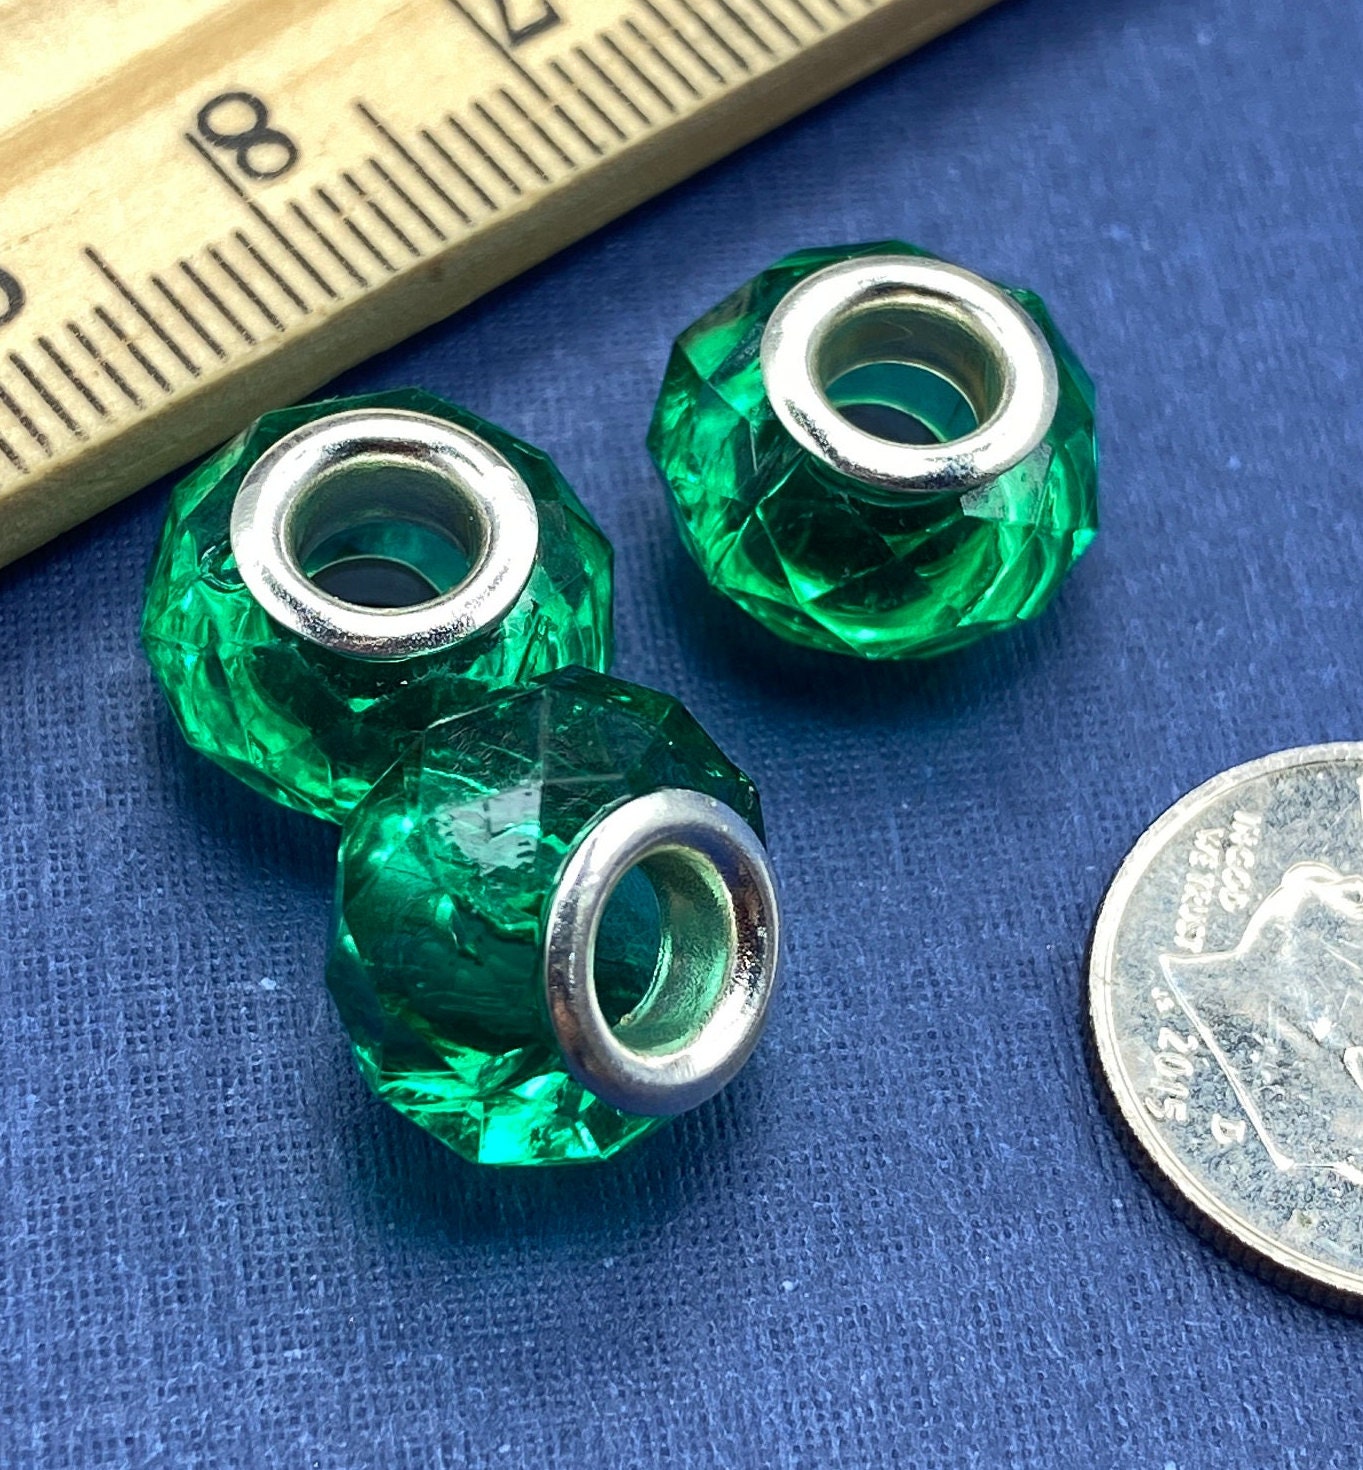 180Pcs 9 Colors Faceted Rondelle Transparent Resin European Beads